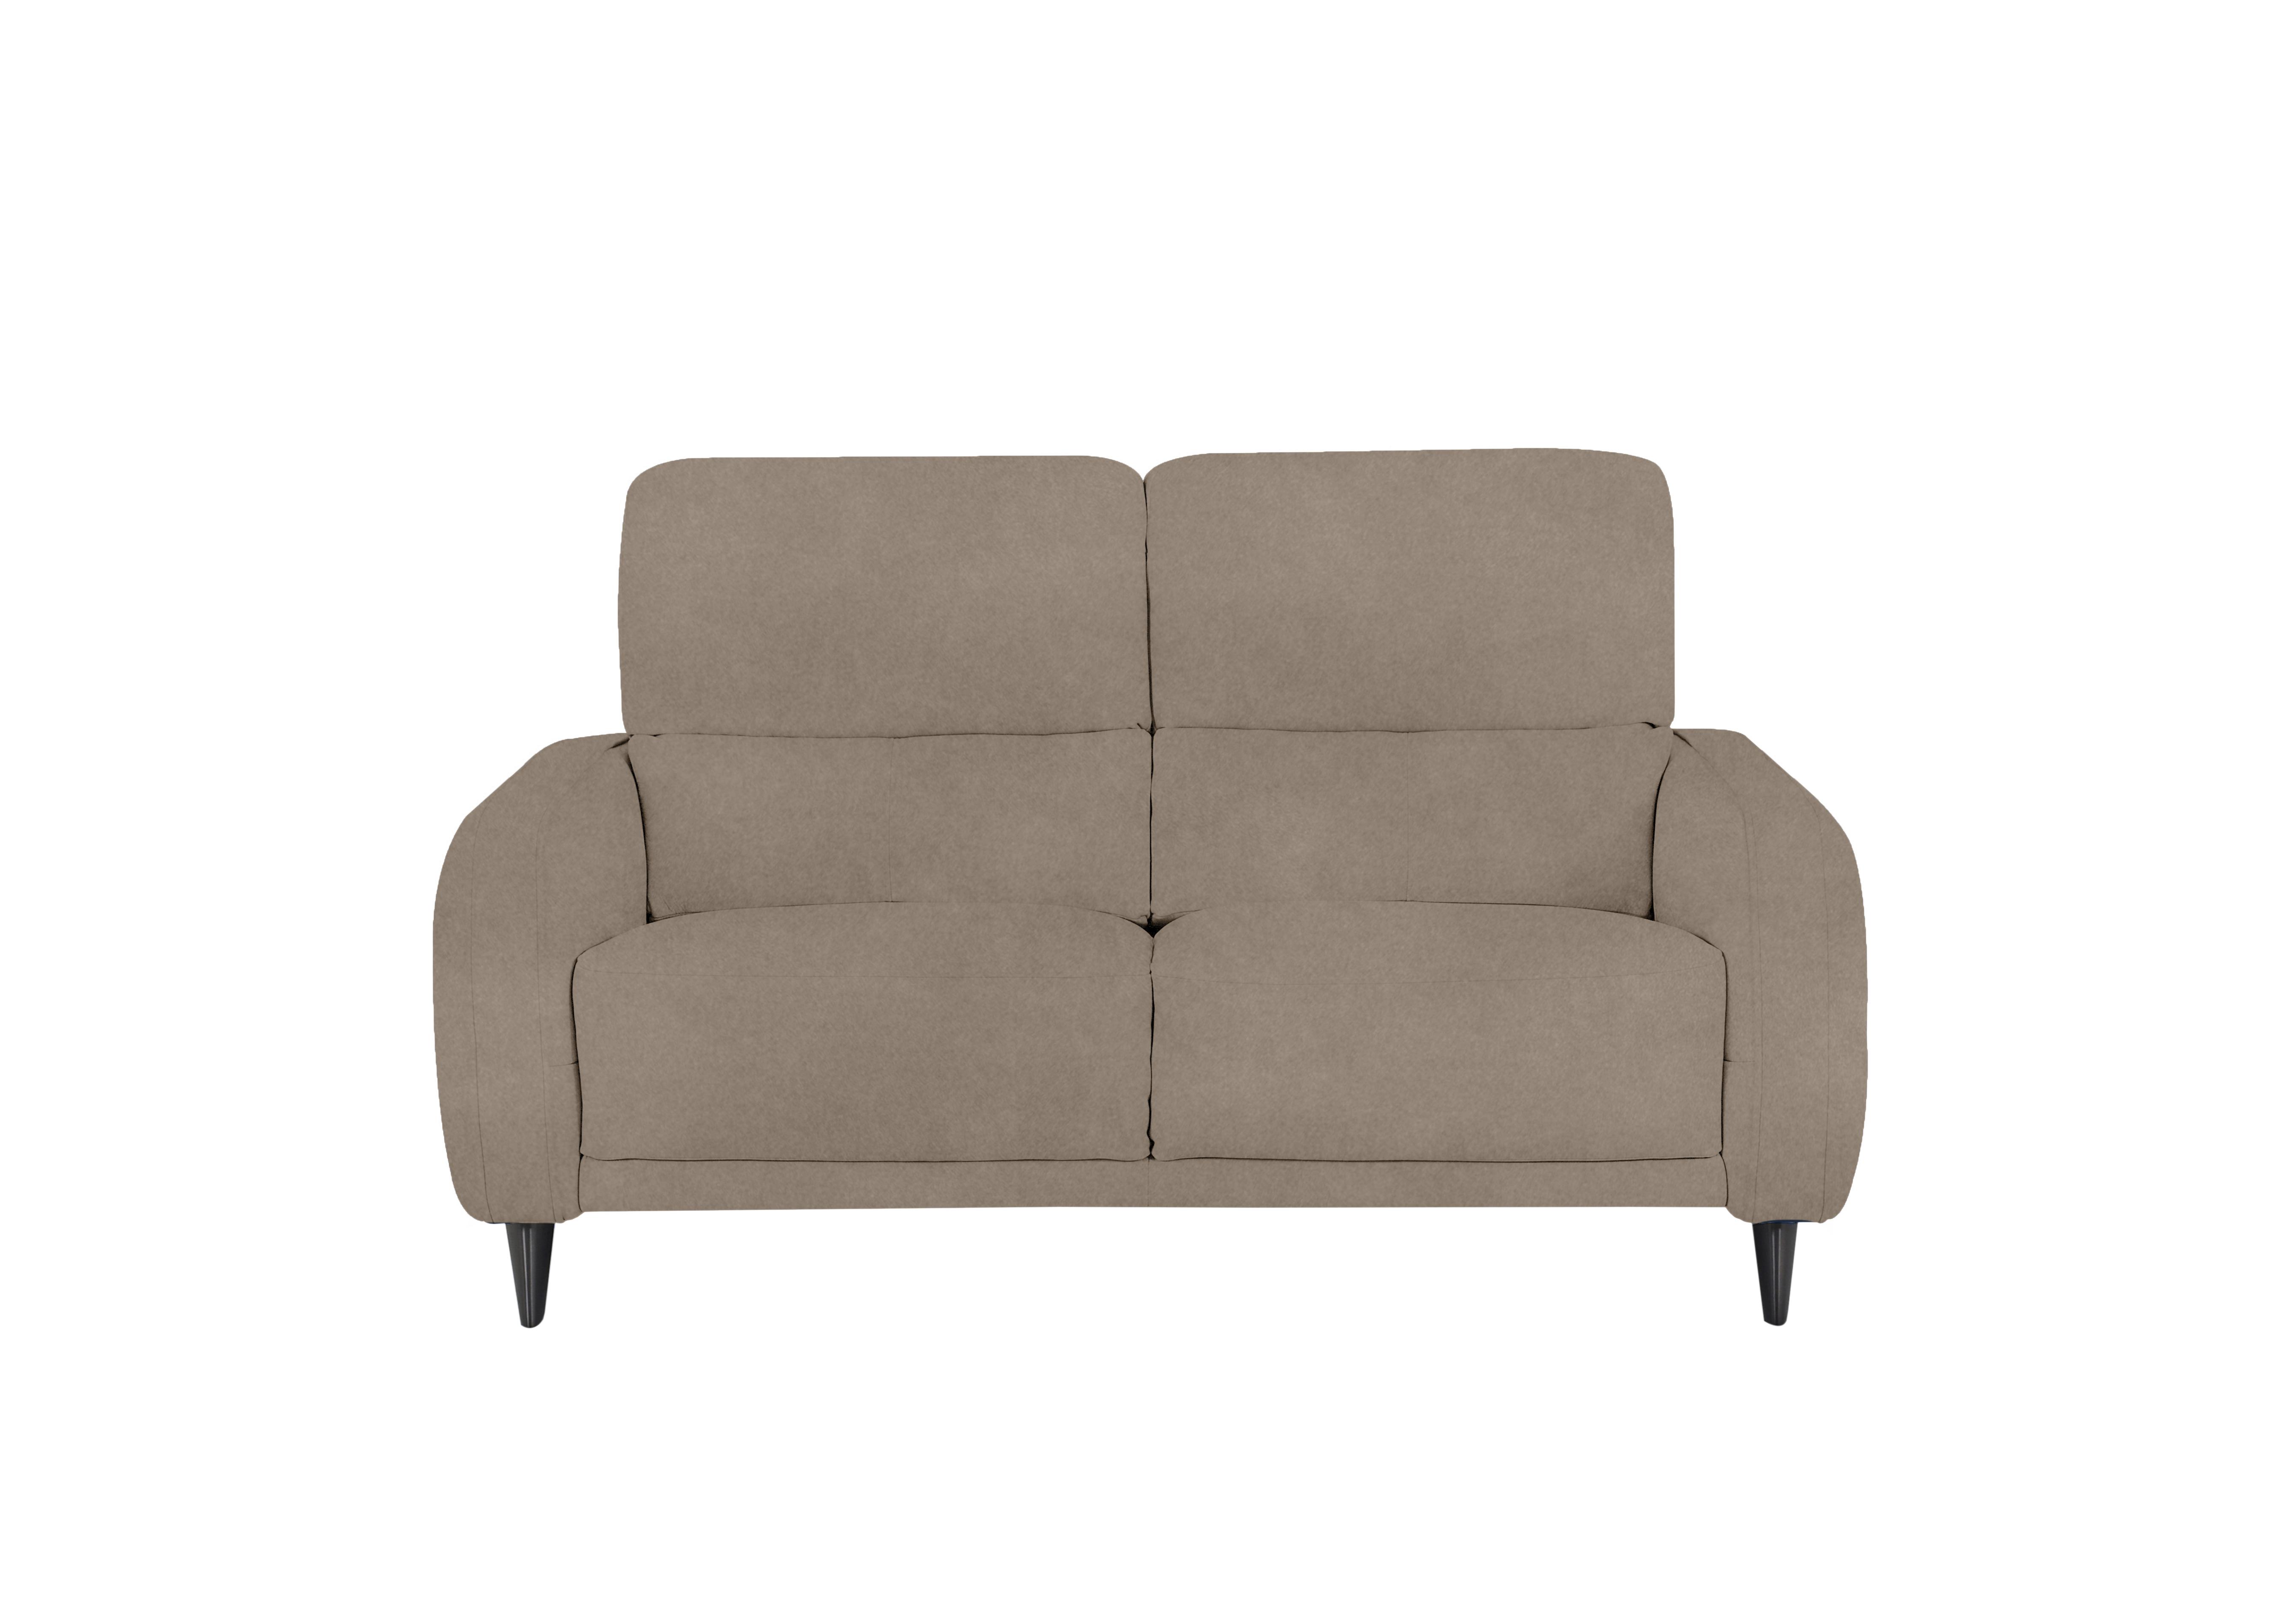 Logan 2.5 Seater Fabric Sofa in Fab-Meg-R32 Light Khaki on Furniture Village